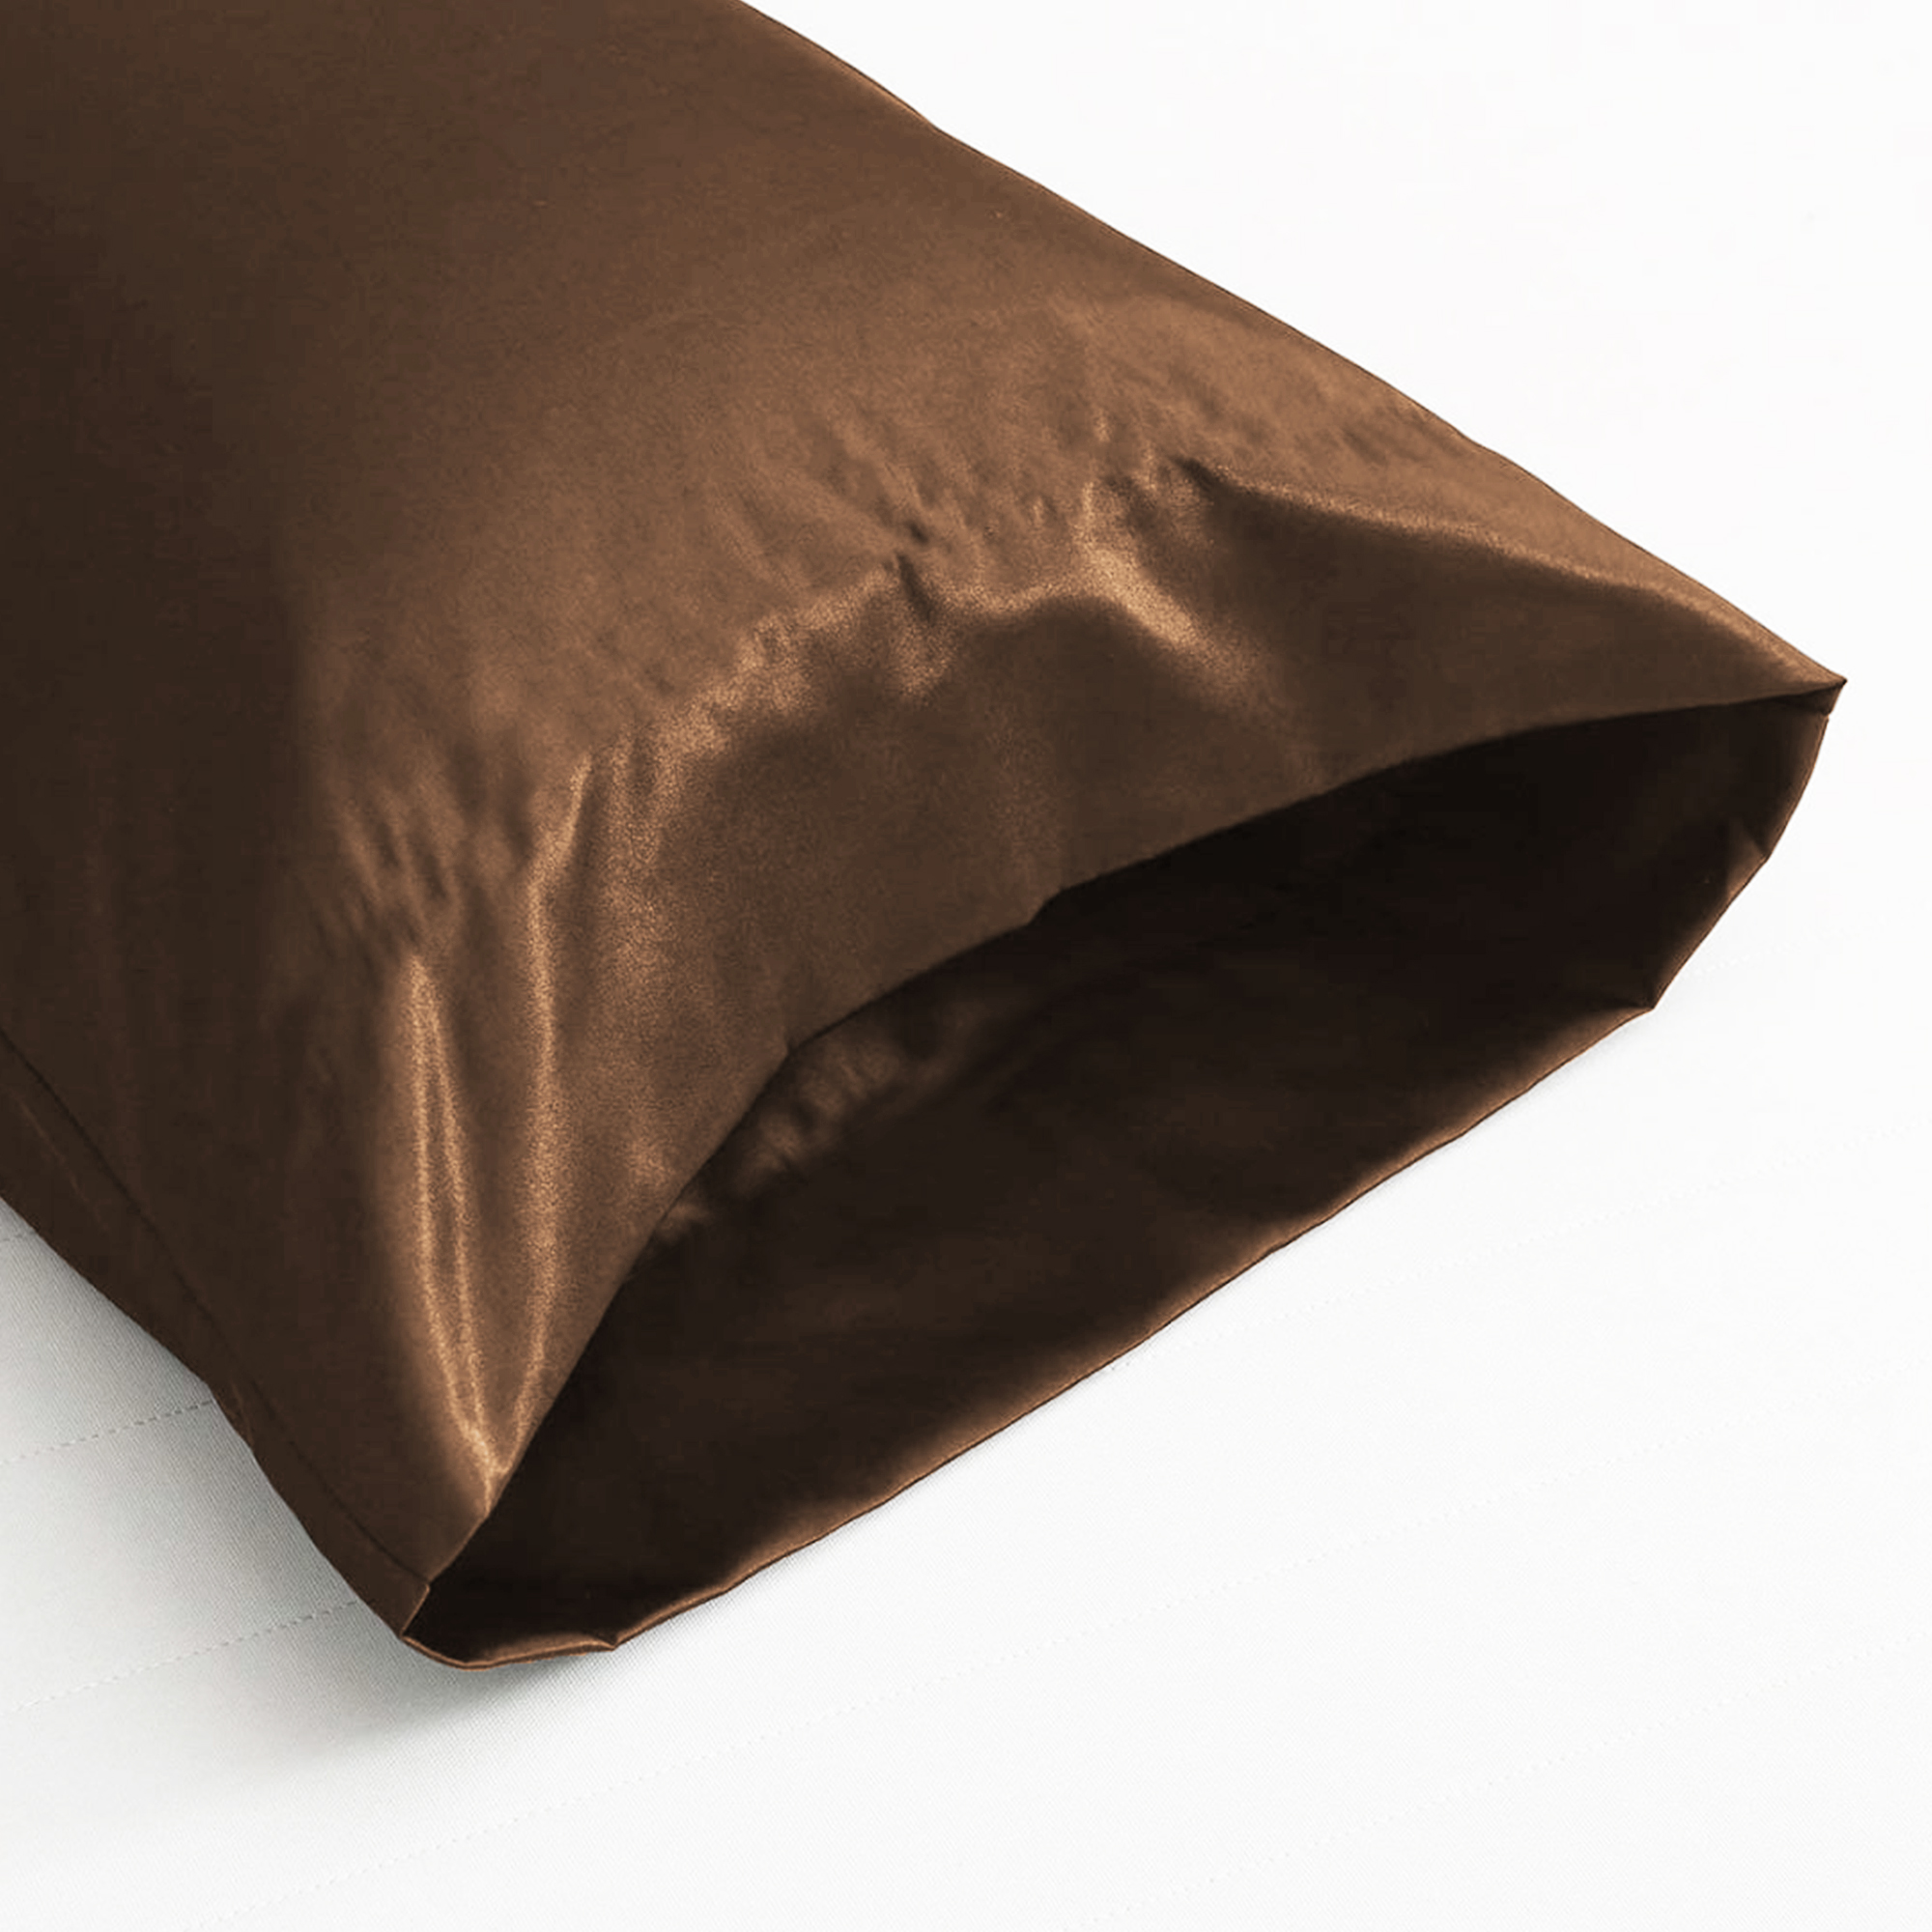 Chocolate 6pc Satin Panel Super King Bed Duvet Quilt Cover Set